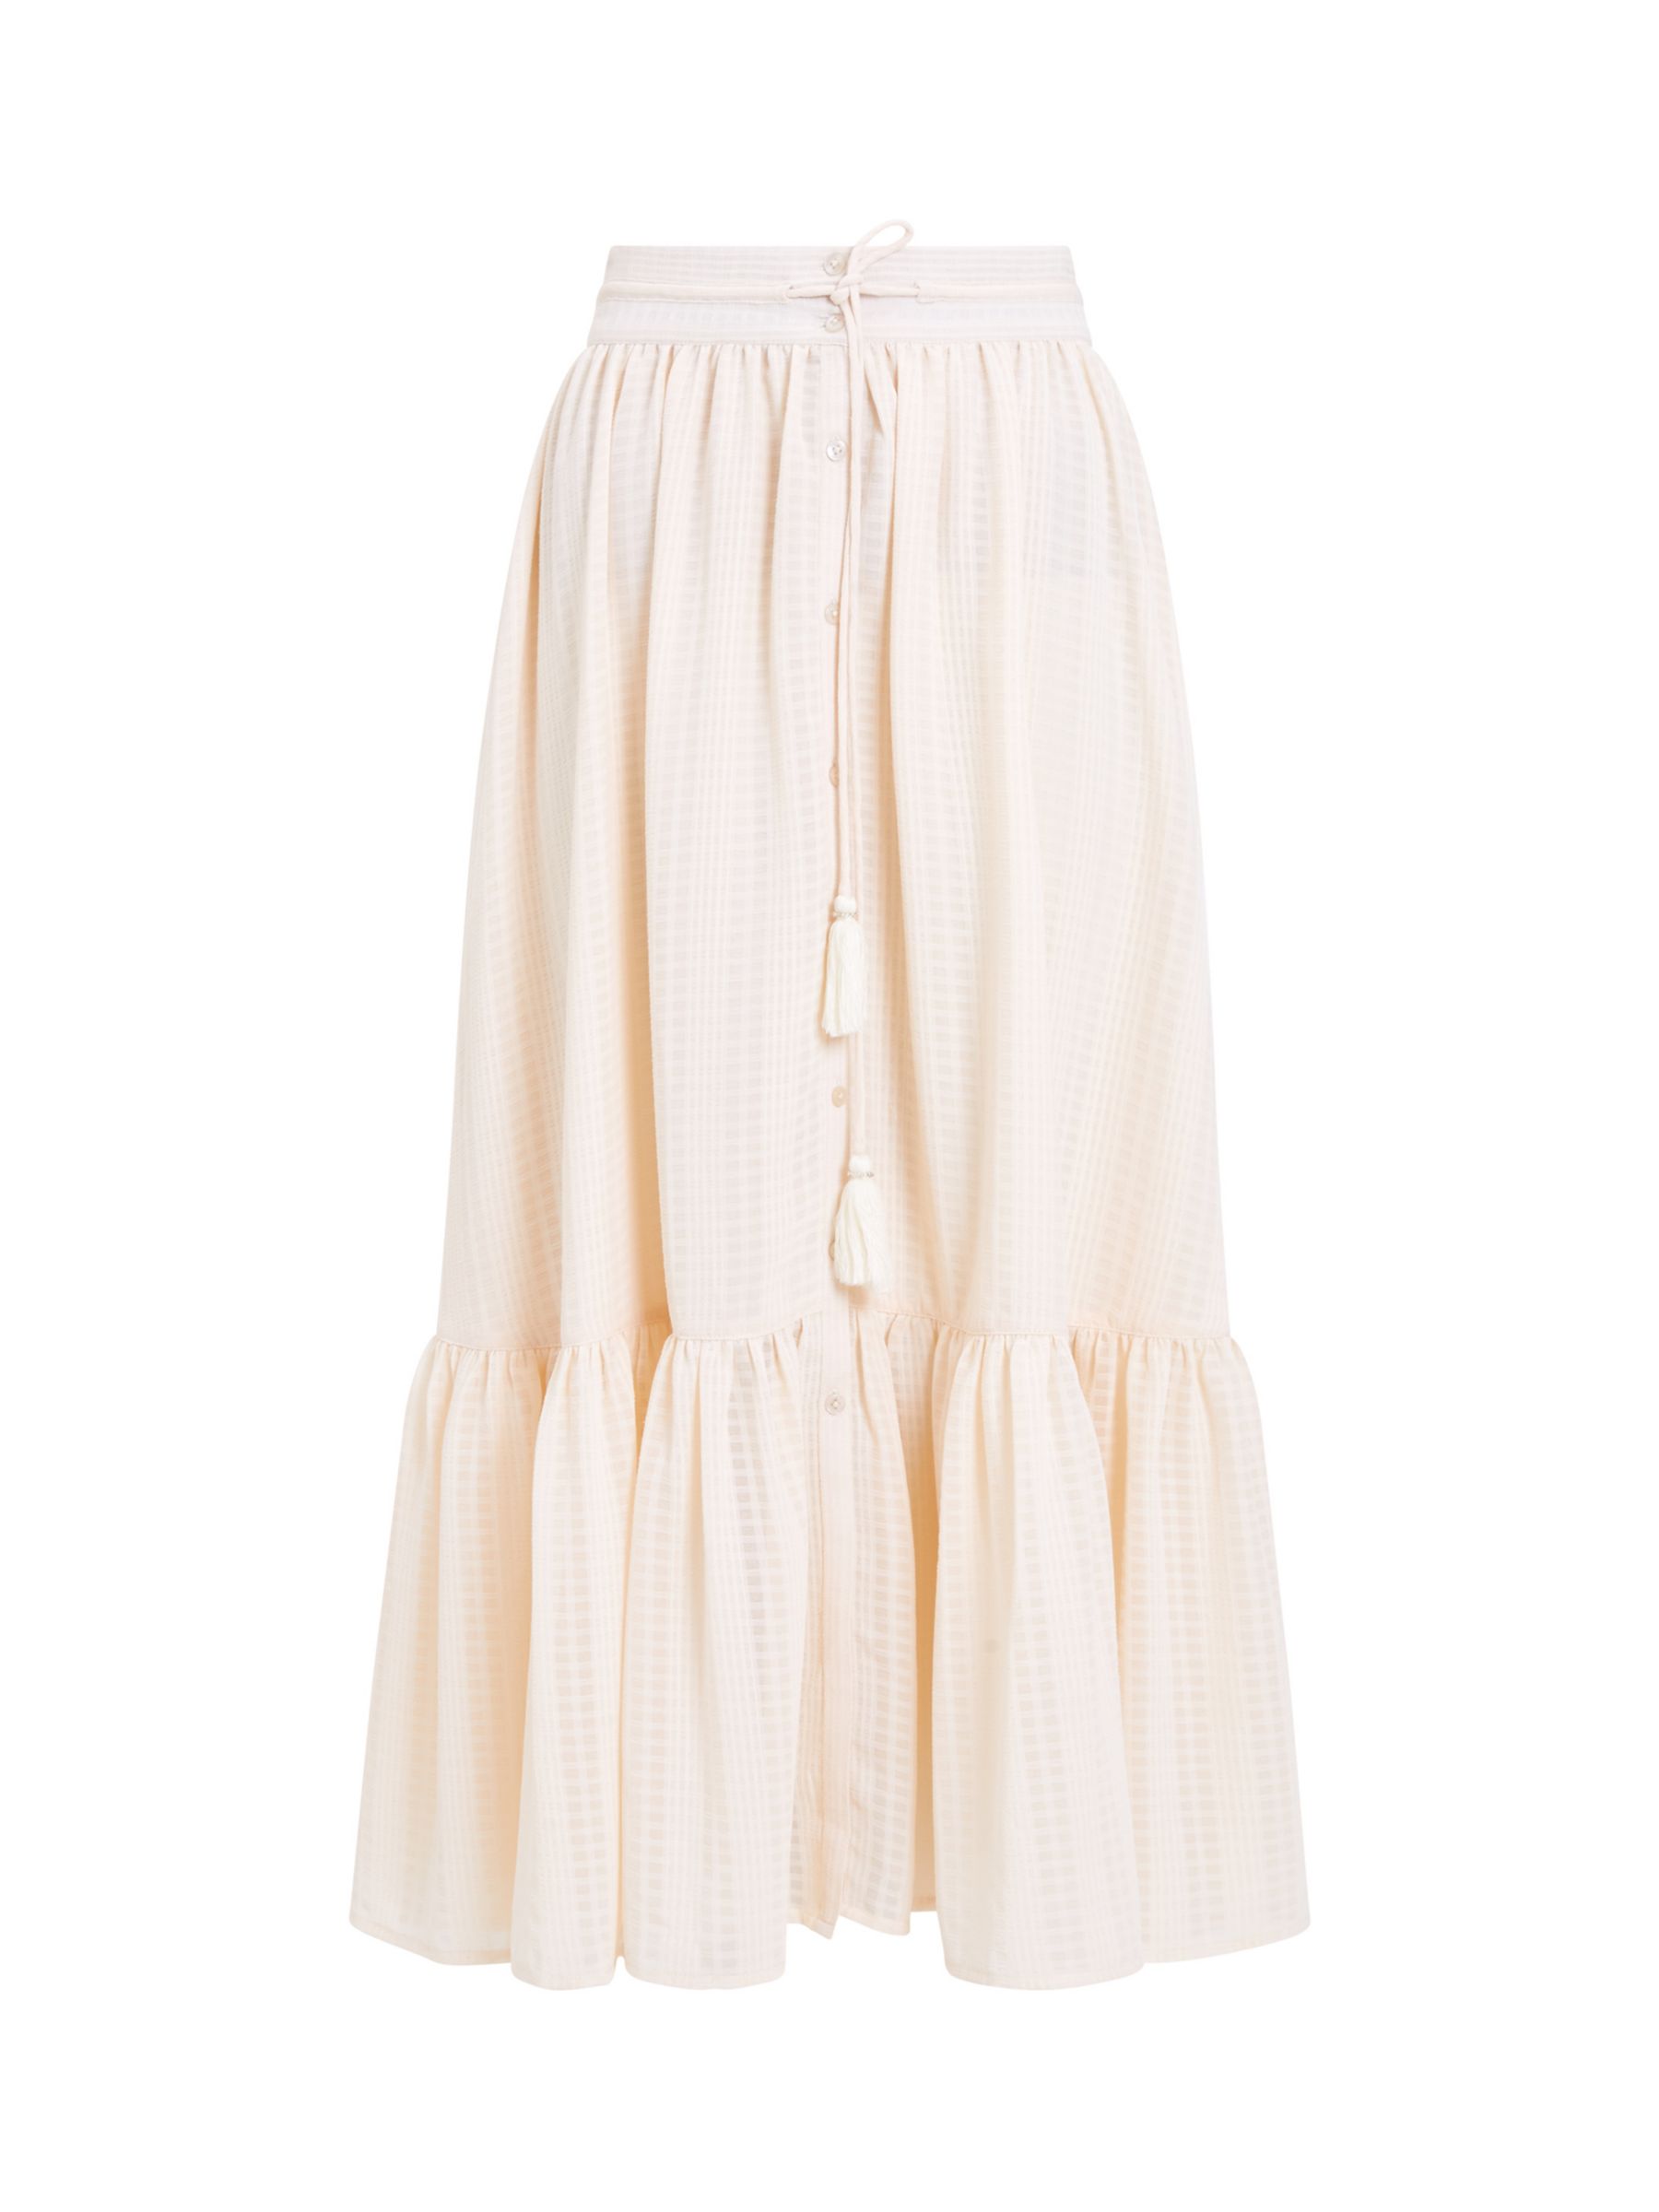 Buy Great Plains Desert Check Tiered Skirt, Ecru Online at johnlewis.com